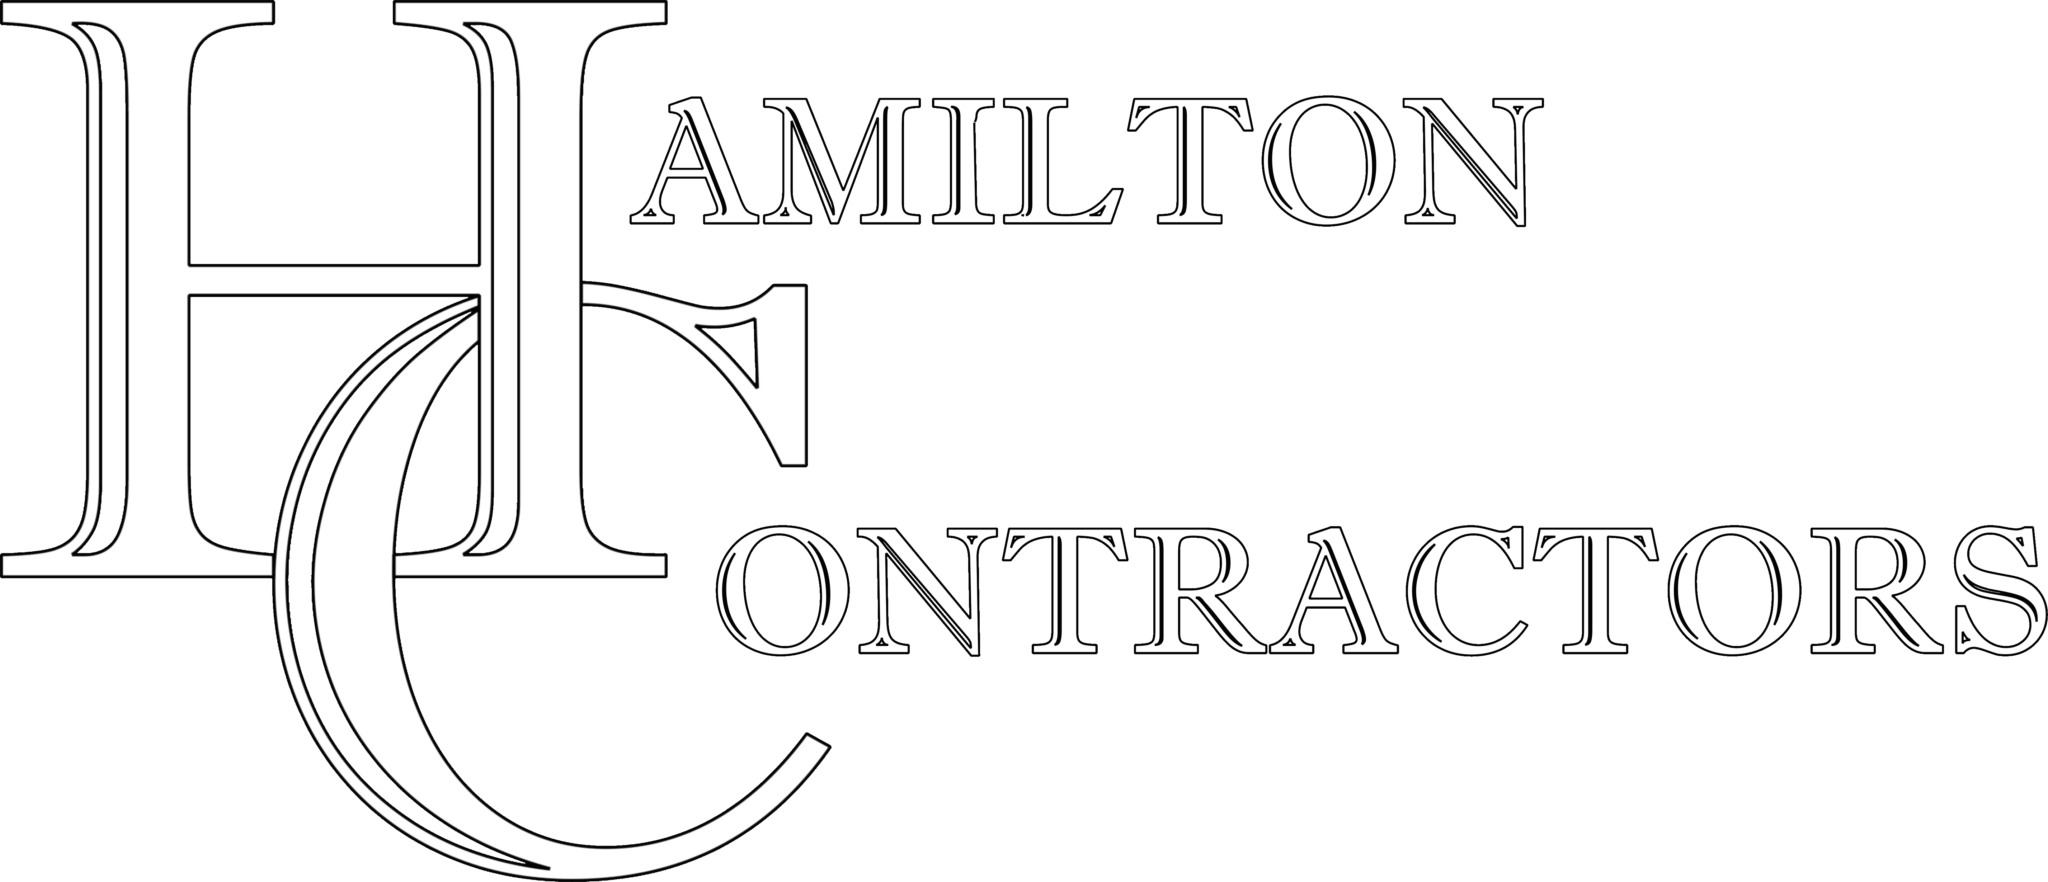 Hamilton Contractors